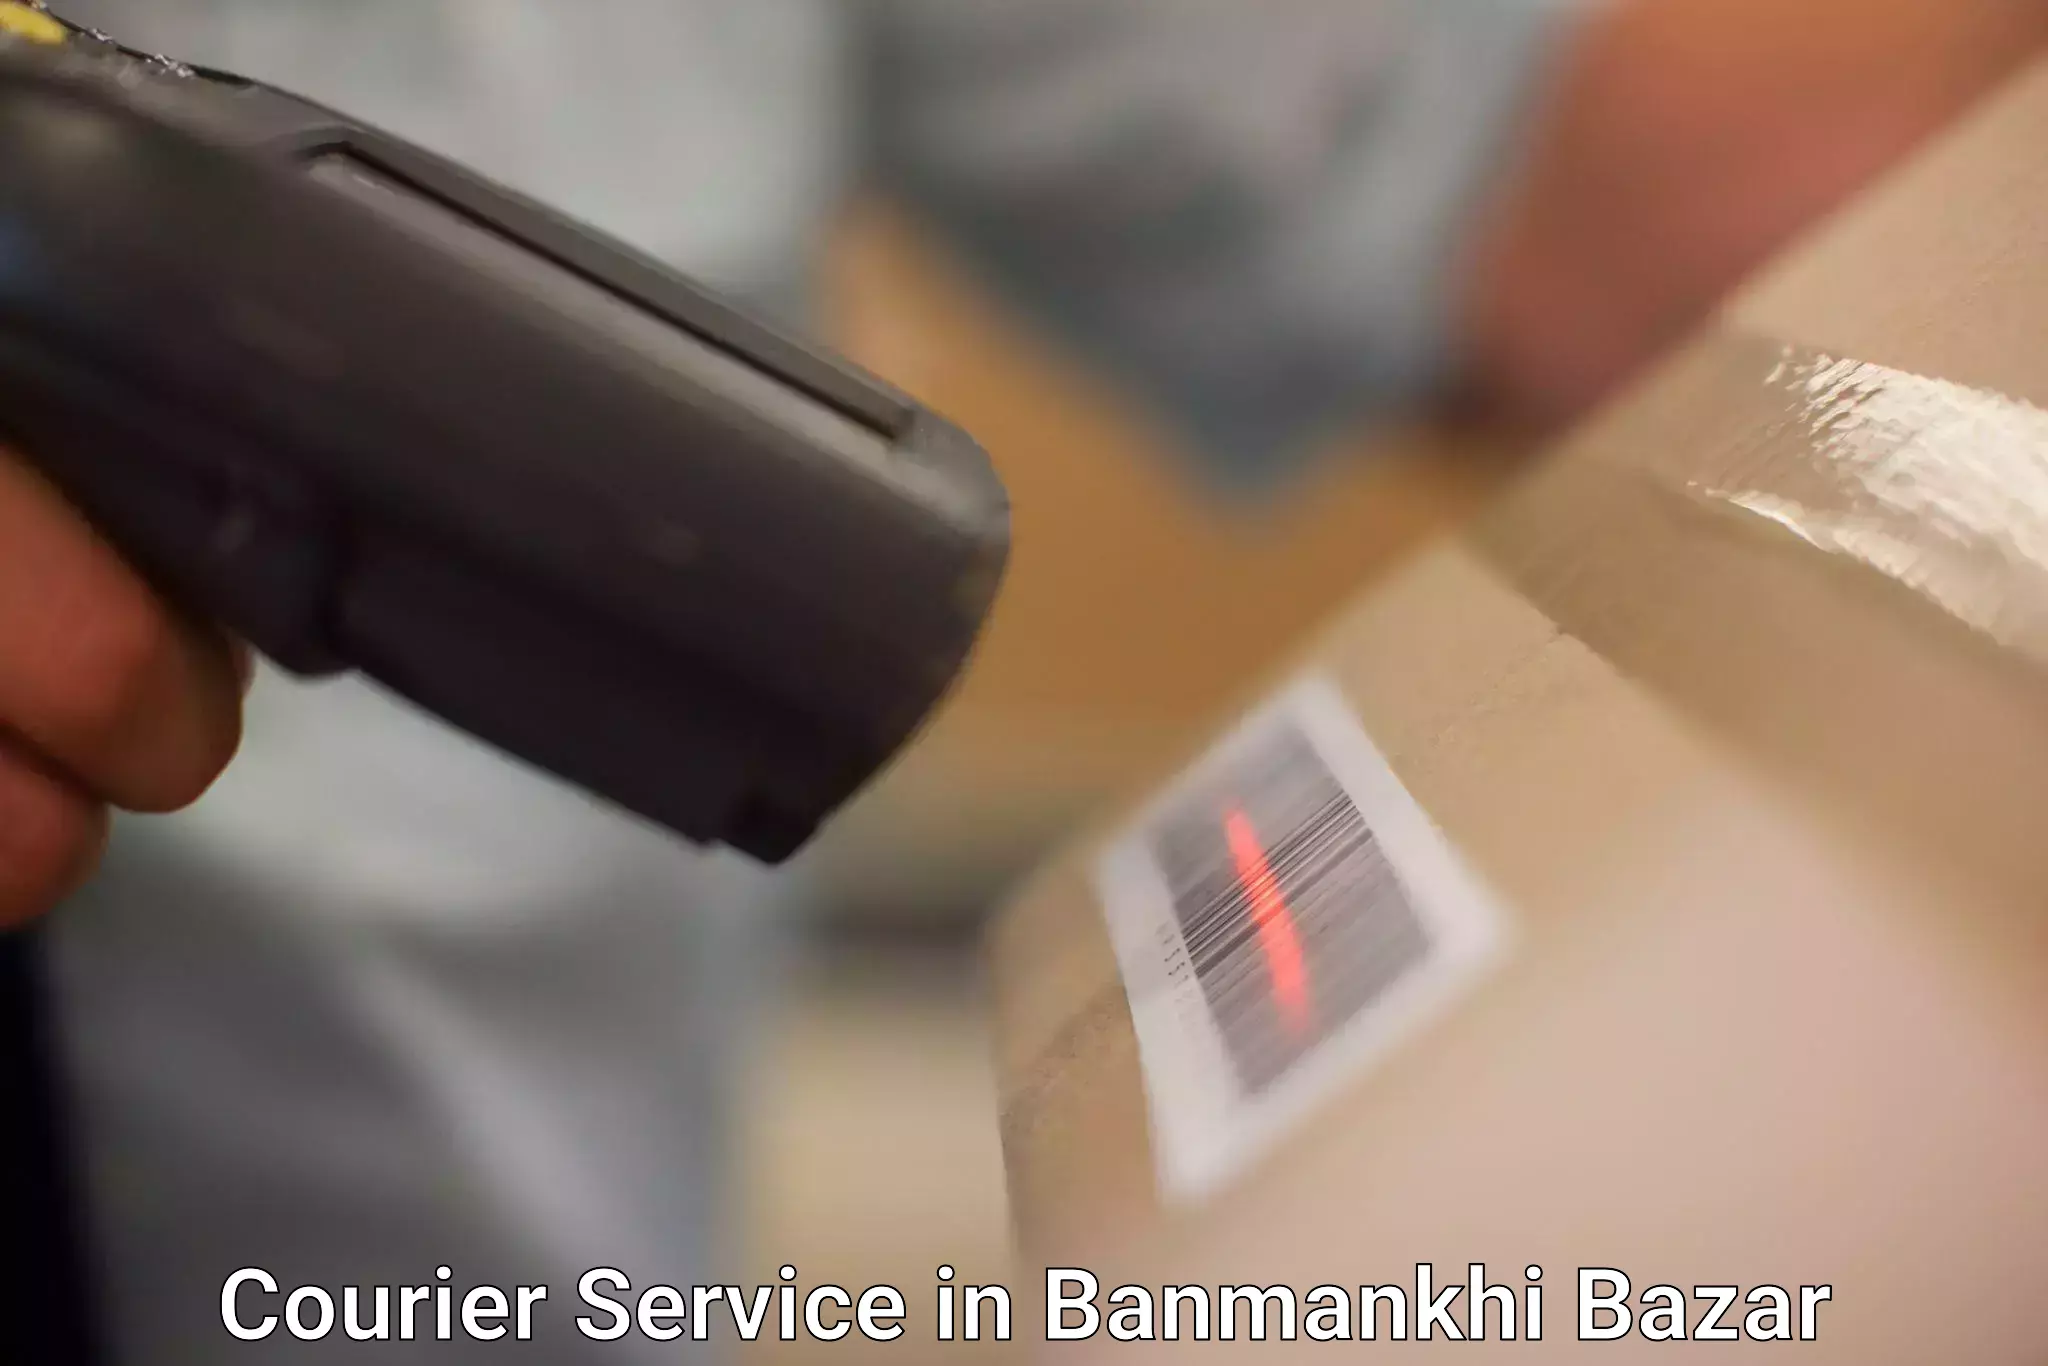 Next-generation courier services in Banmankhi Bazar